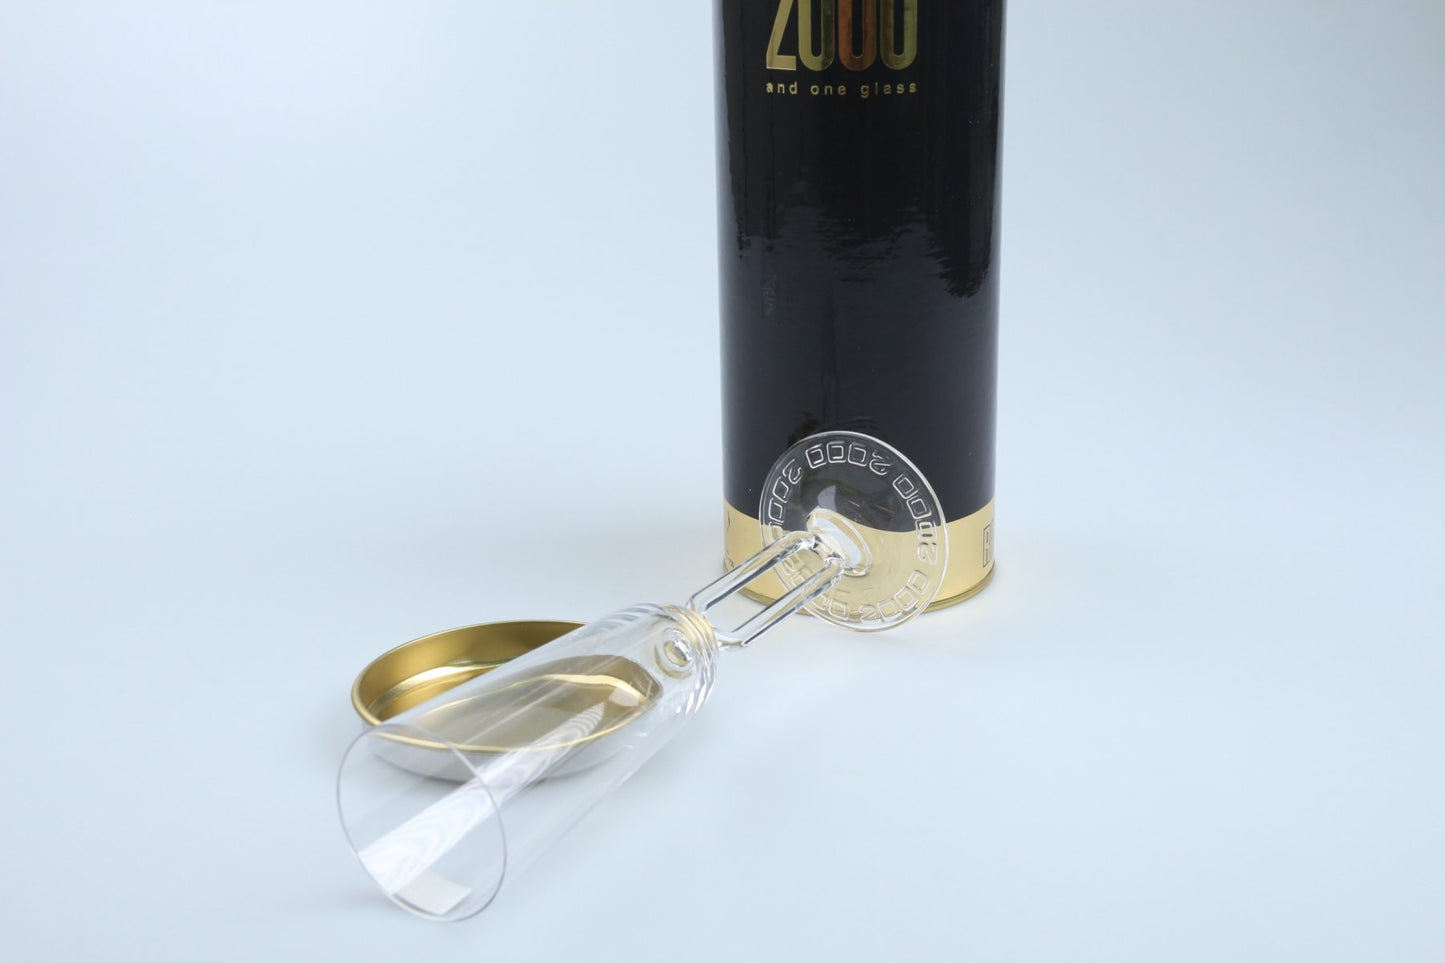 Champagner Glas 2000 in OVP